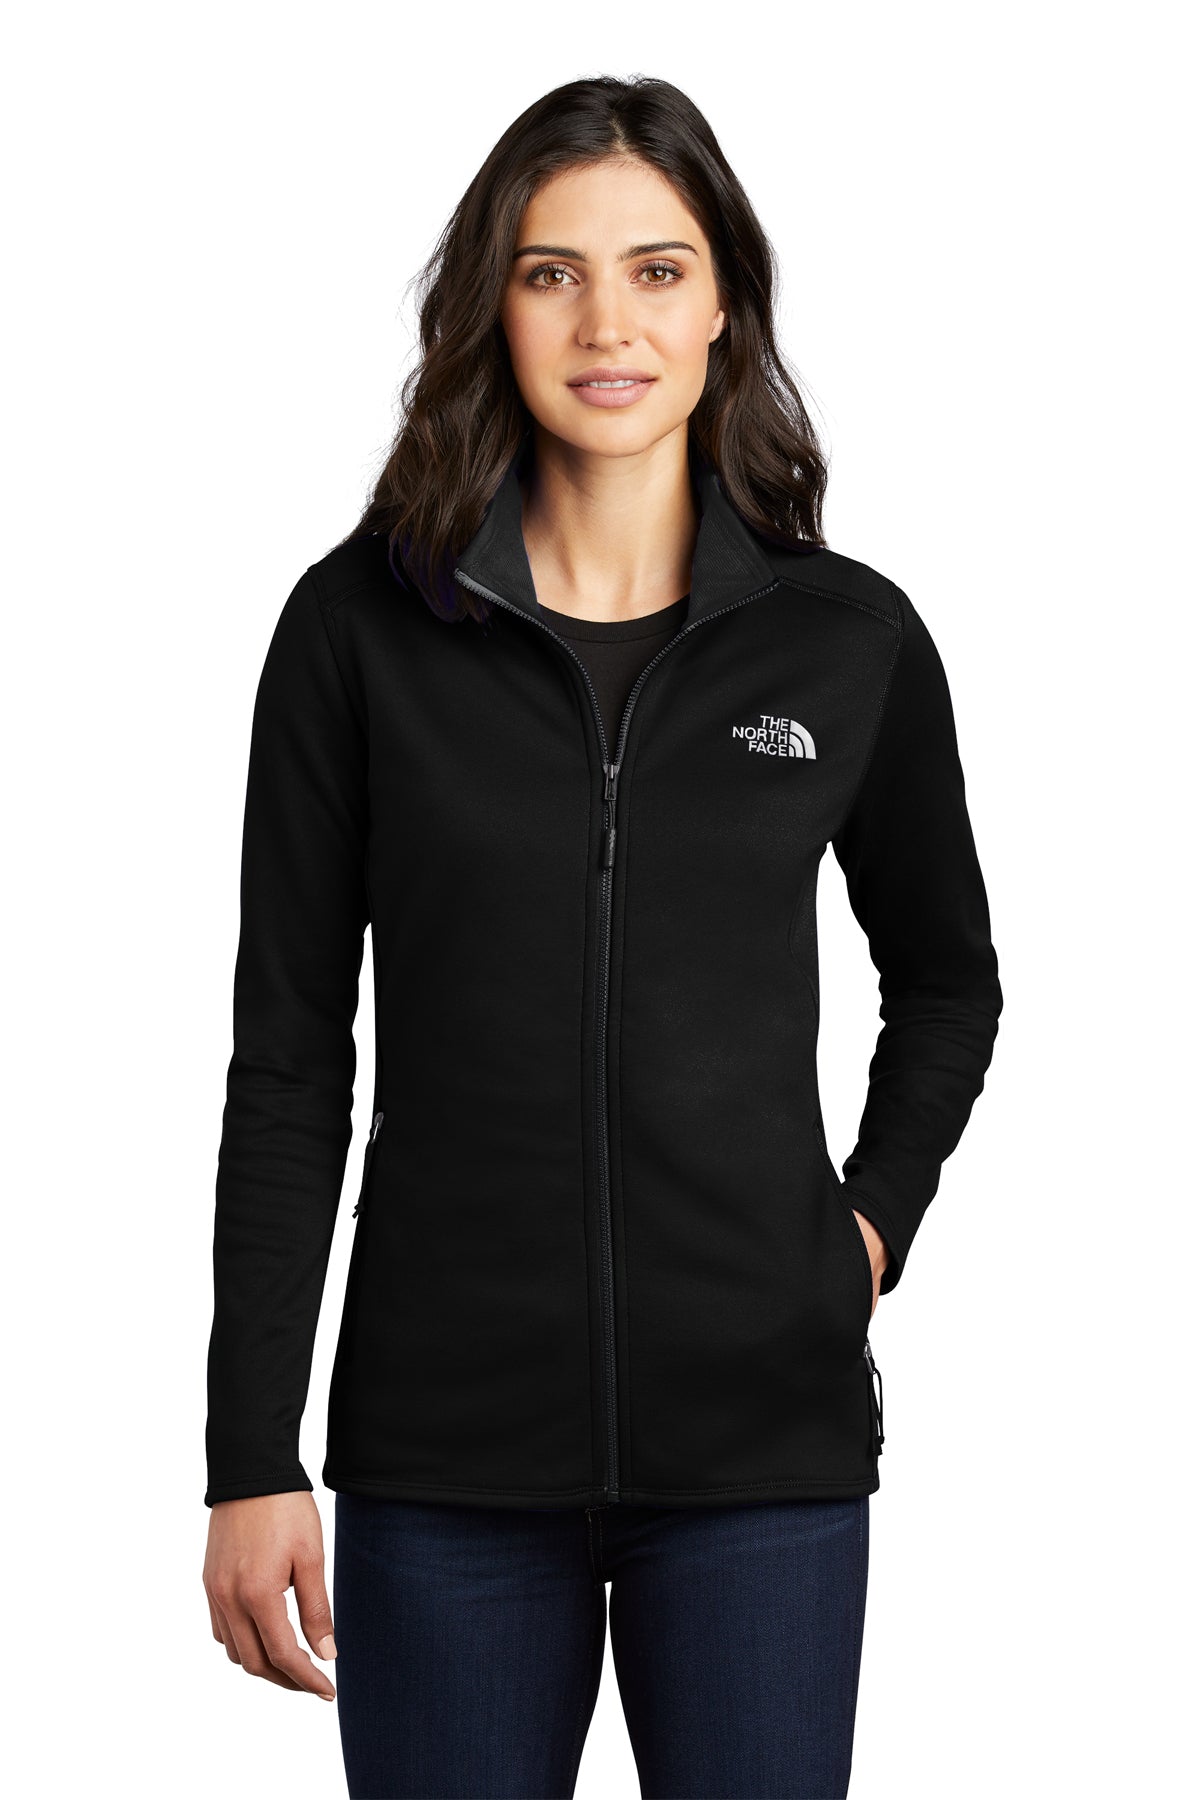 MEDSTAR NF0A7V62  The North Face ® Ladies Skyline Full-Zip Fleece Jacket